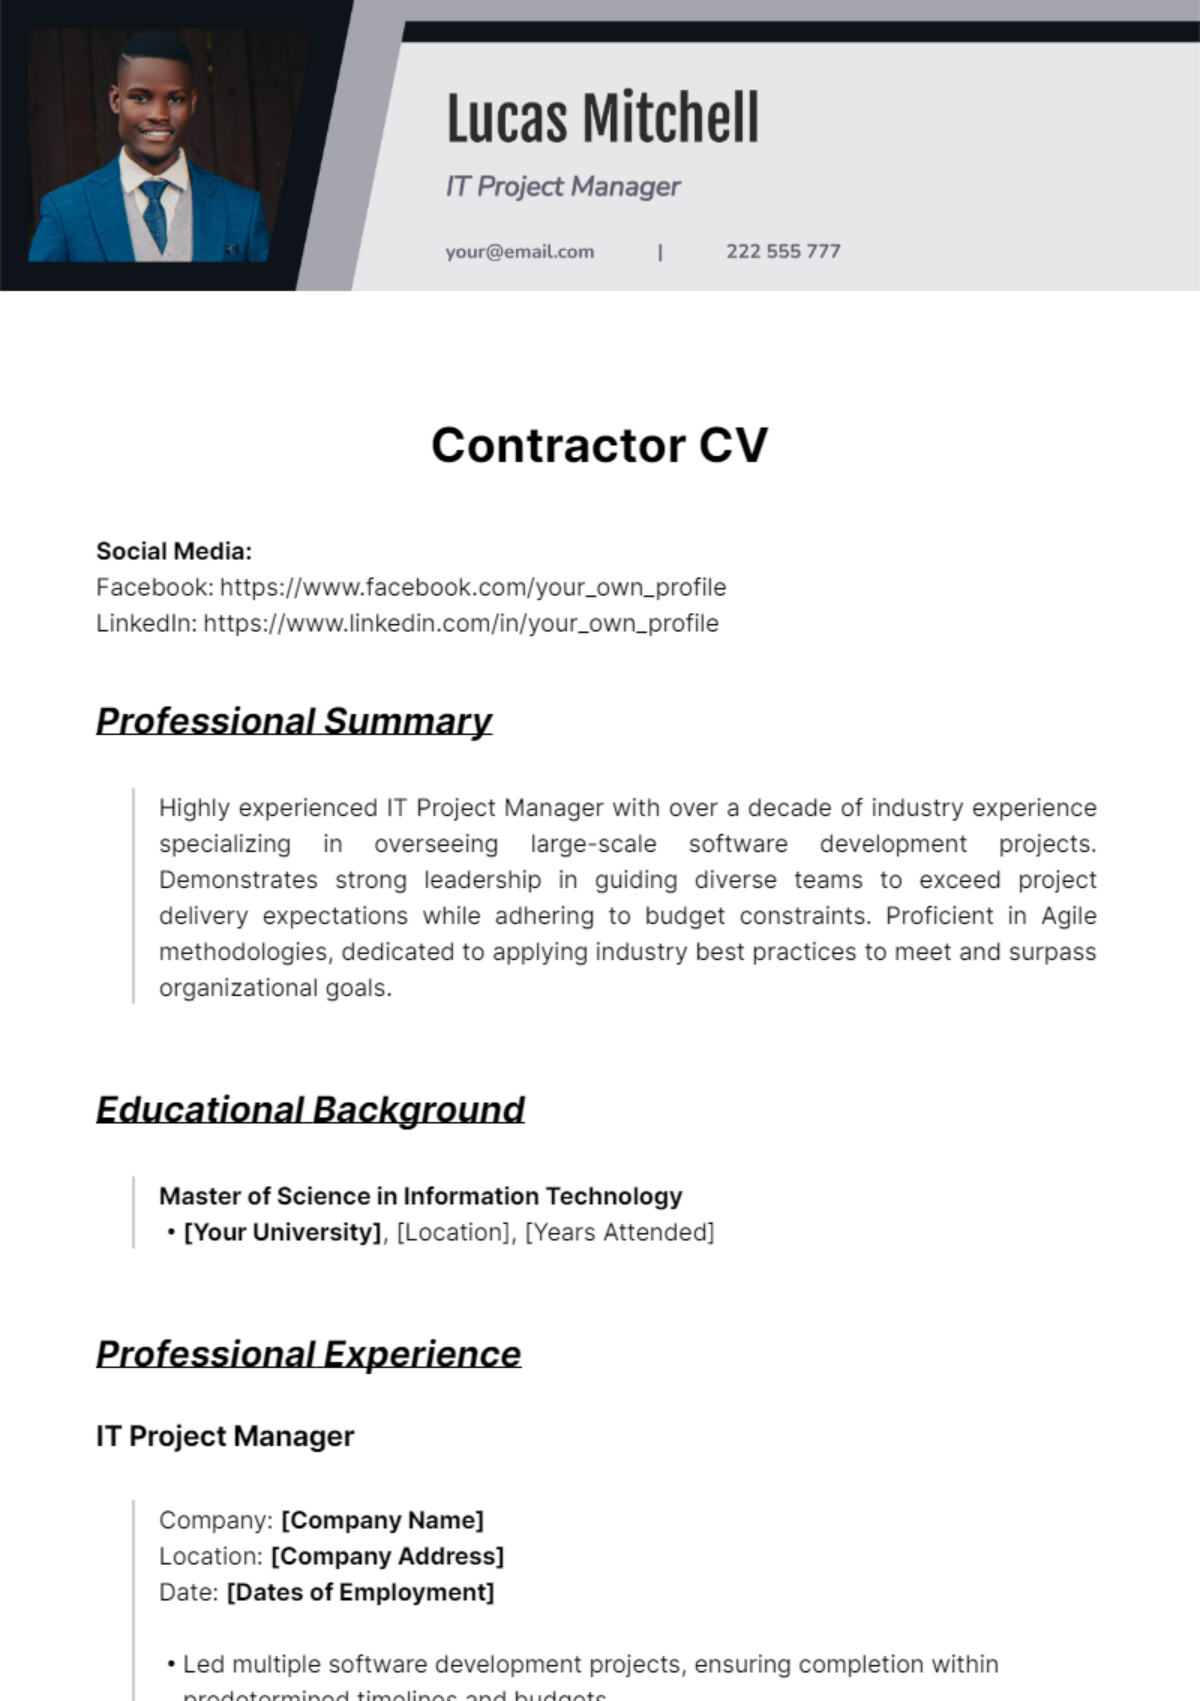 Contractor CV Template